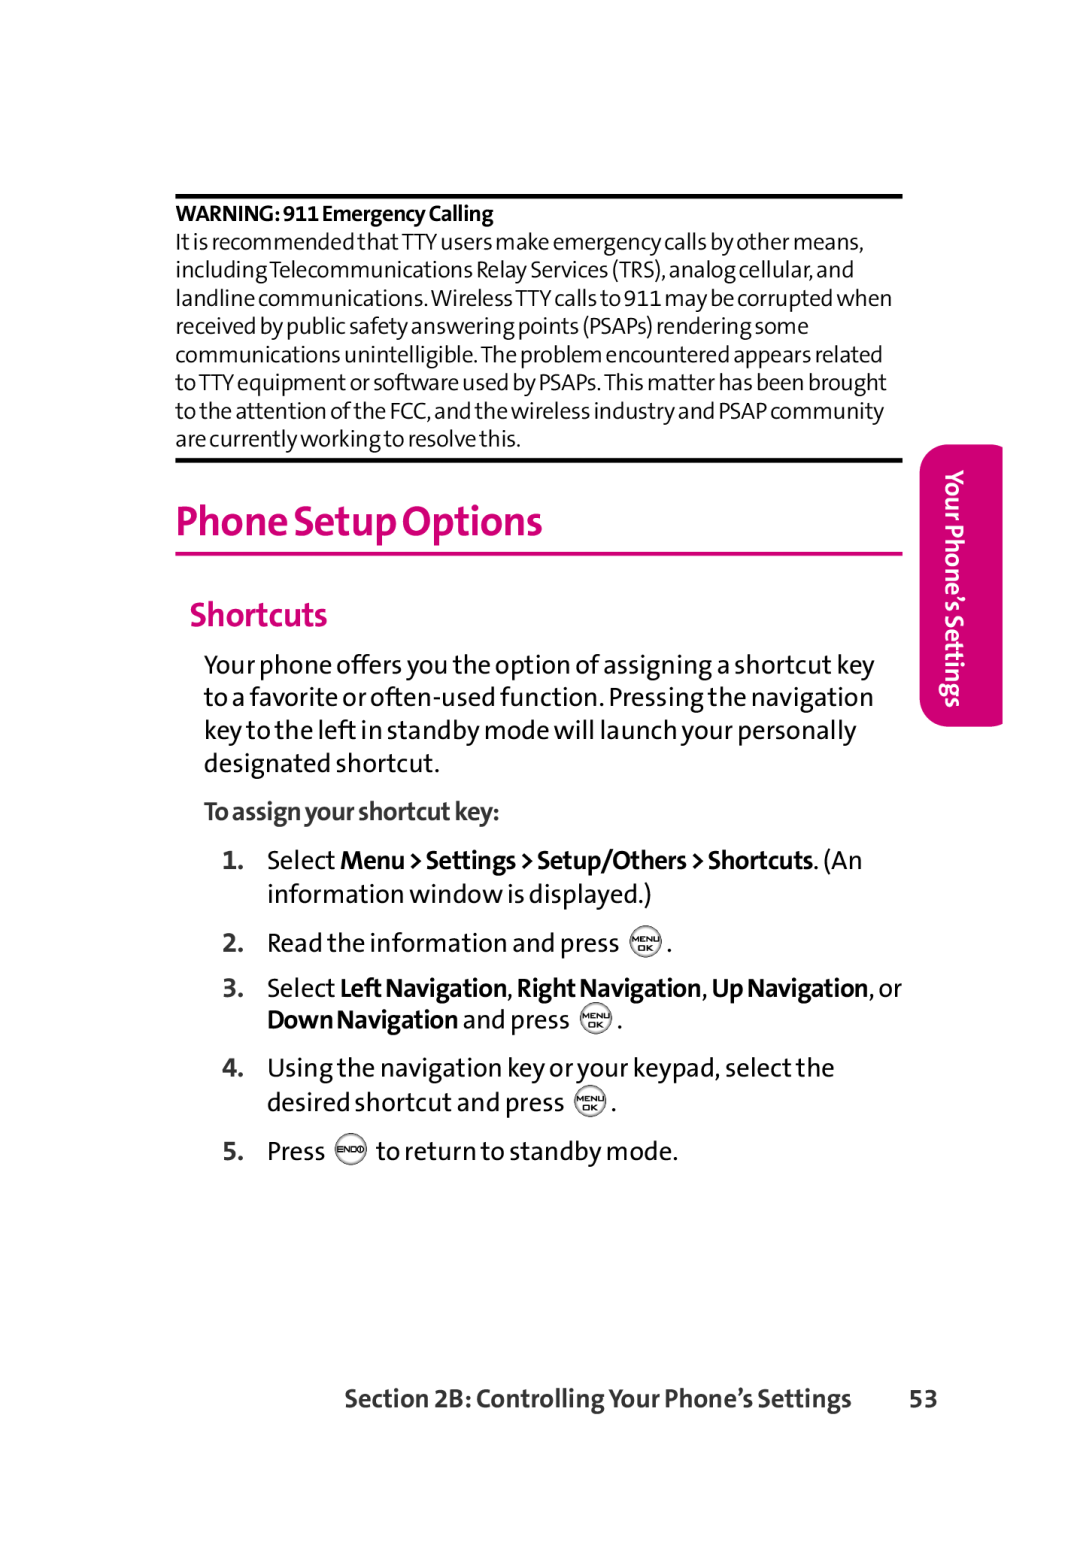 LG Electronics 350 manual Phone Setup Options, Shortcuts, Toassignyourshortcutkey, Your Phone’s Settings 